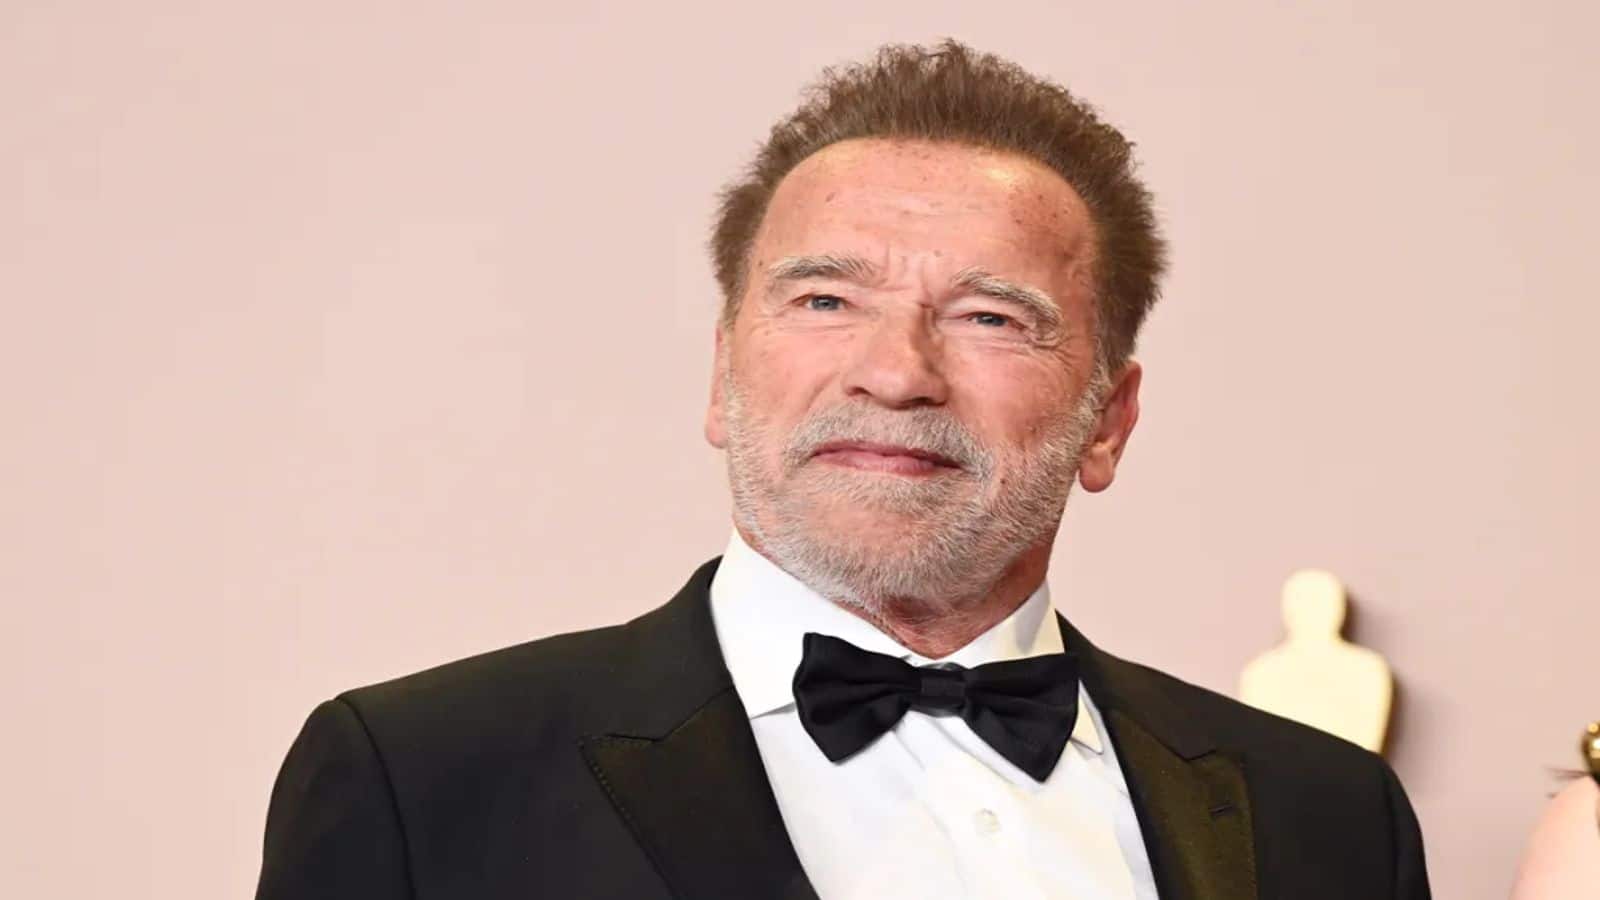 Arnold Schwarzenegger undergoes pacemaker surgery; jokes about being 'more machine'